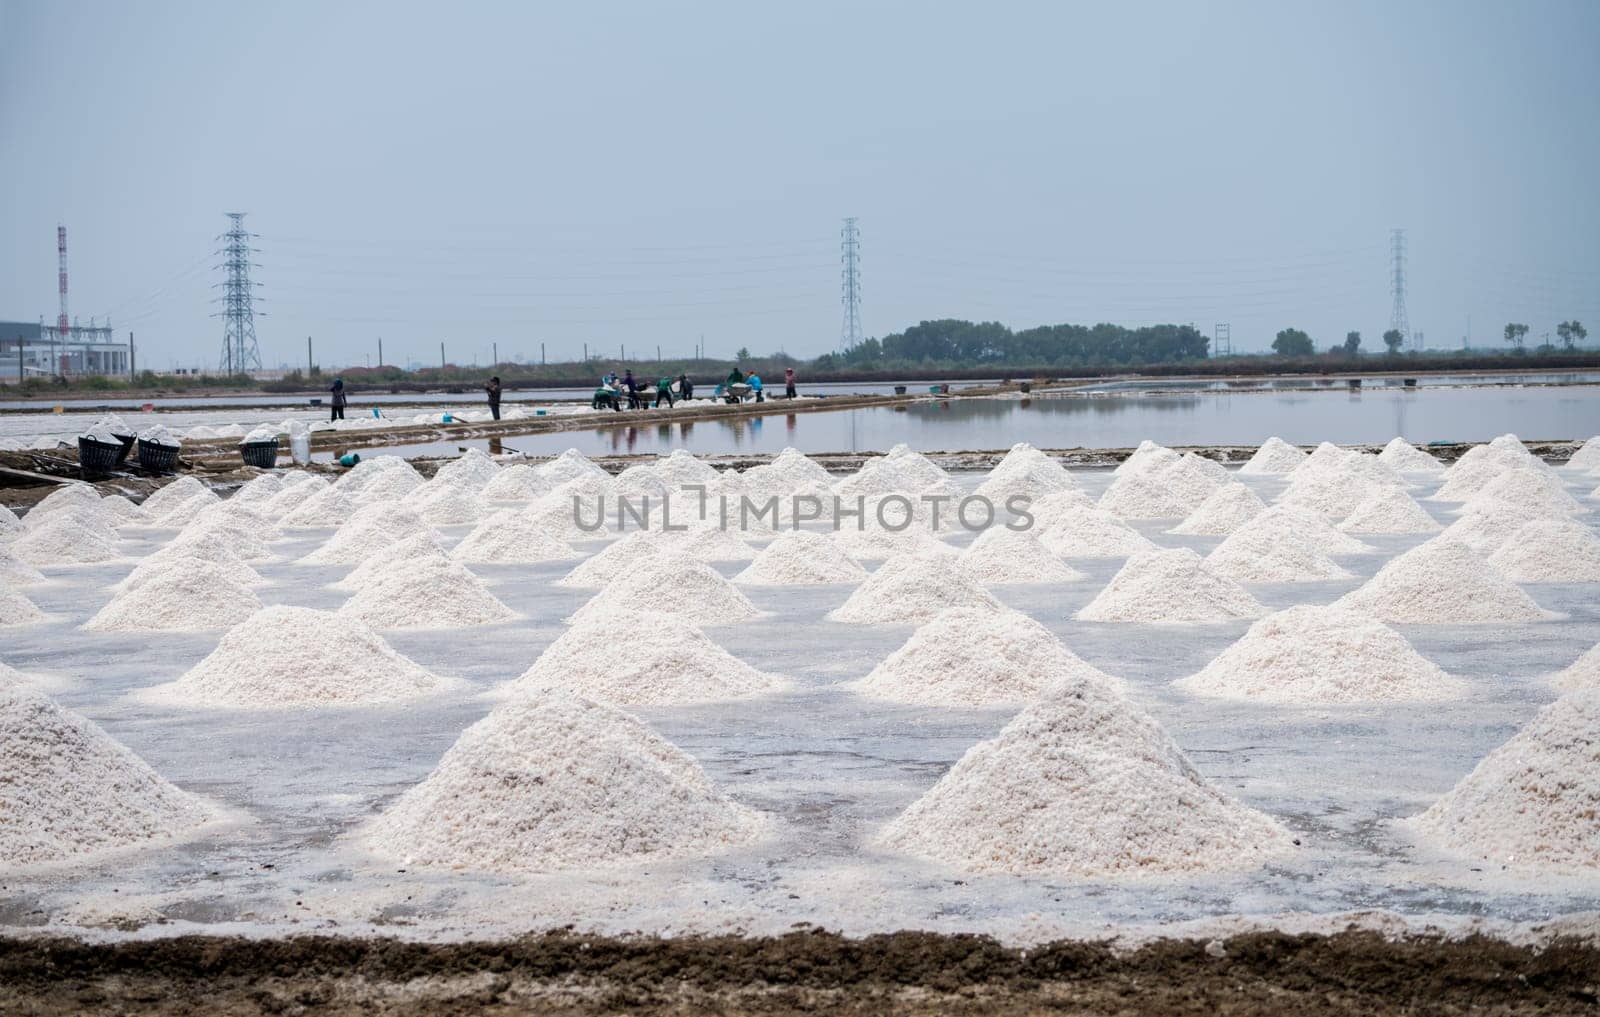 Sea salt farm in Thailand. Brine salt. Raw material of salt industrial. Sodium Chloride. Evaporation and crystallization of sea water. Worker working on a farm. Salt harvesting. Agriculture industry.